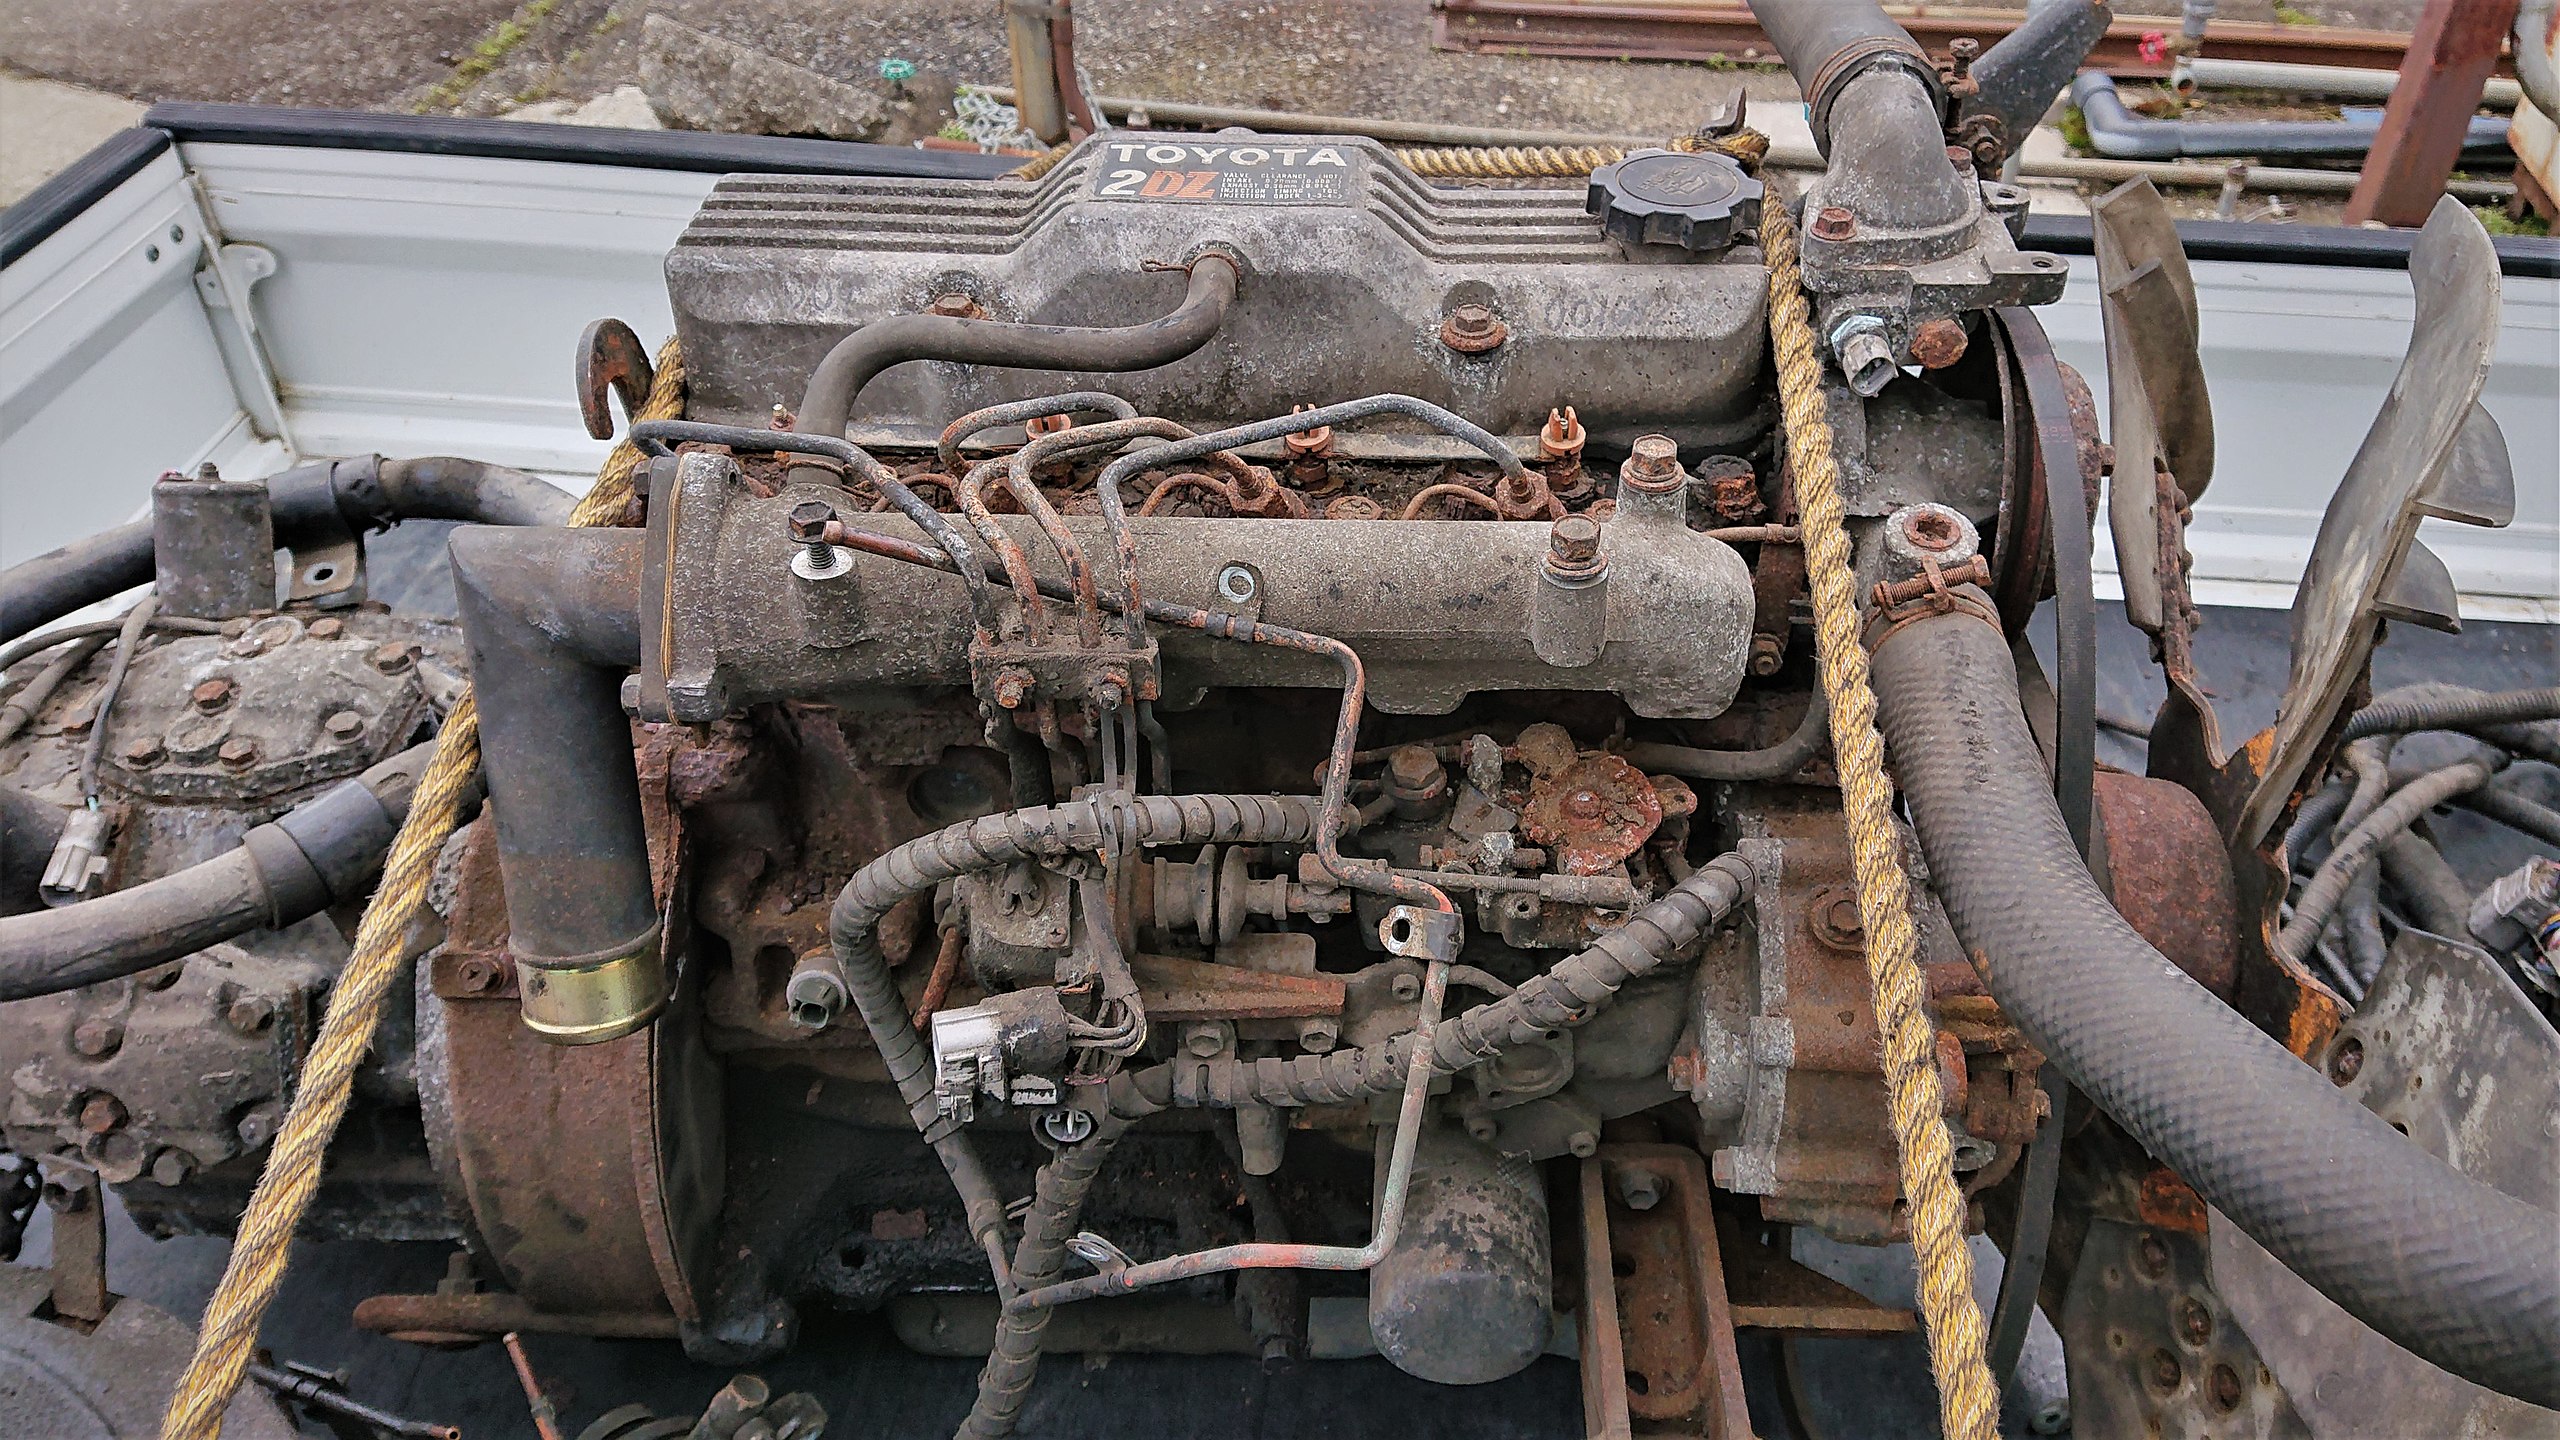 File:Toyota 2D engine.jpg - Wikimedia Commons